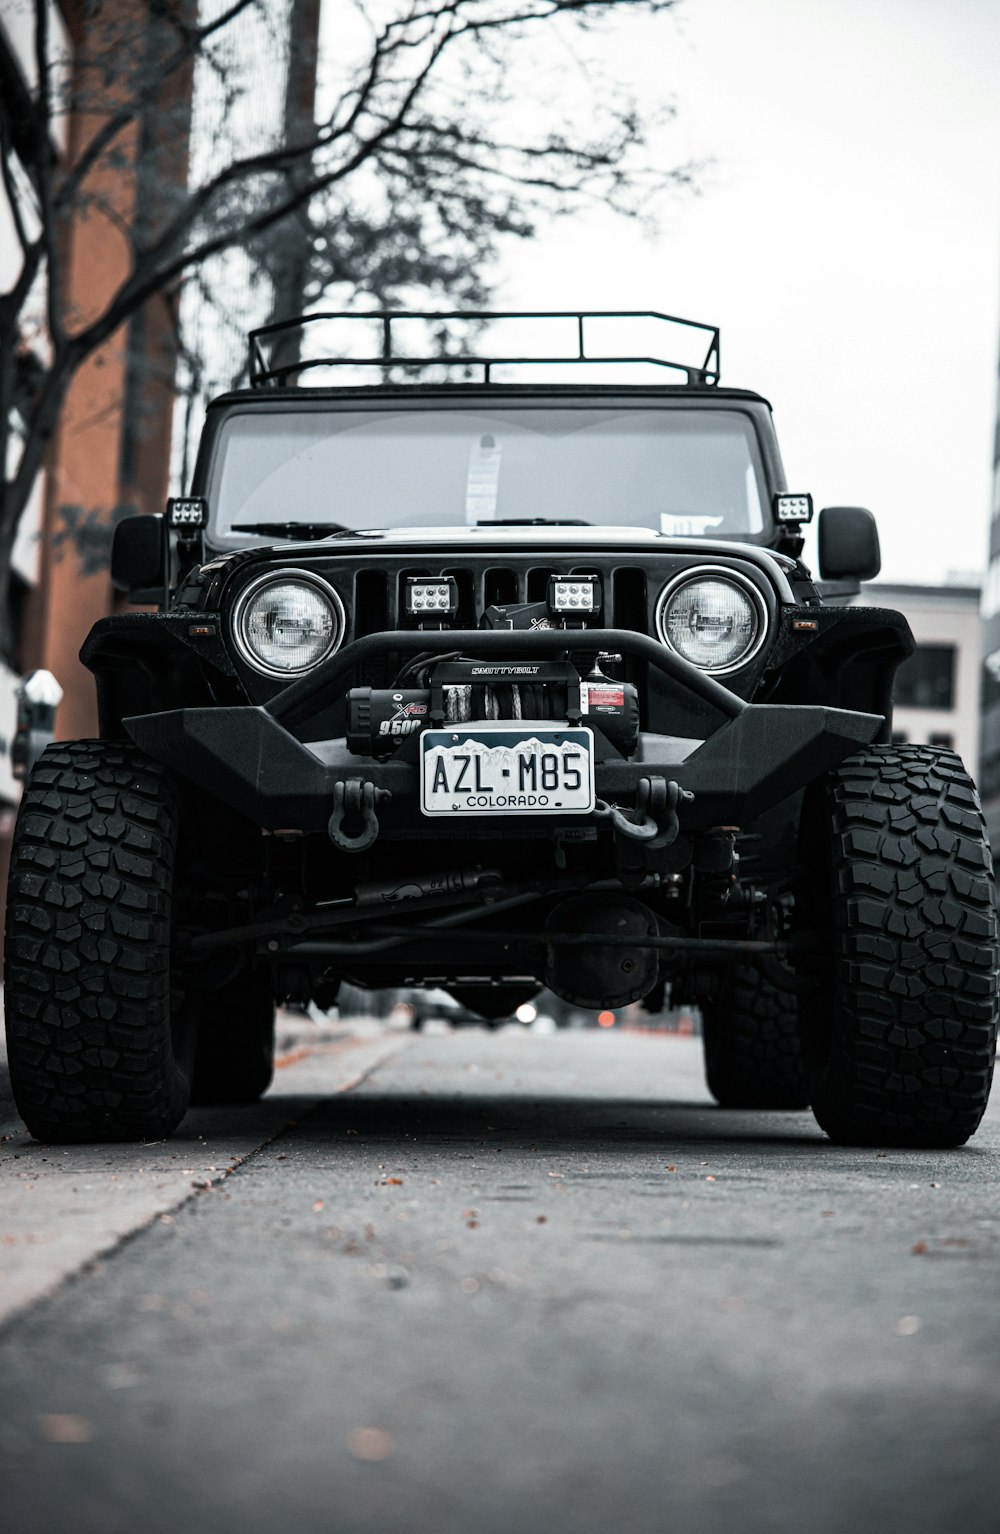 Black Jeep Pictures | Download Free Images on Unsplash